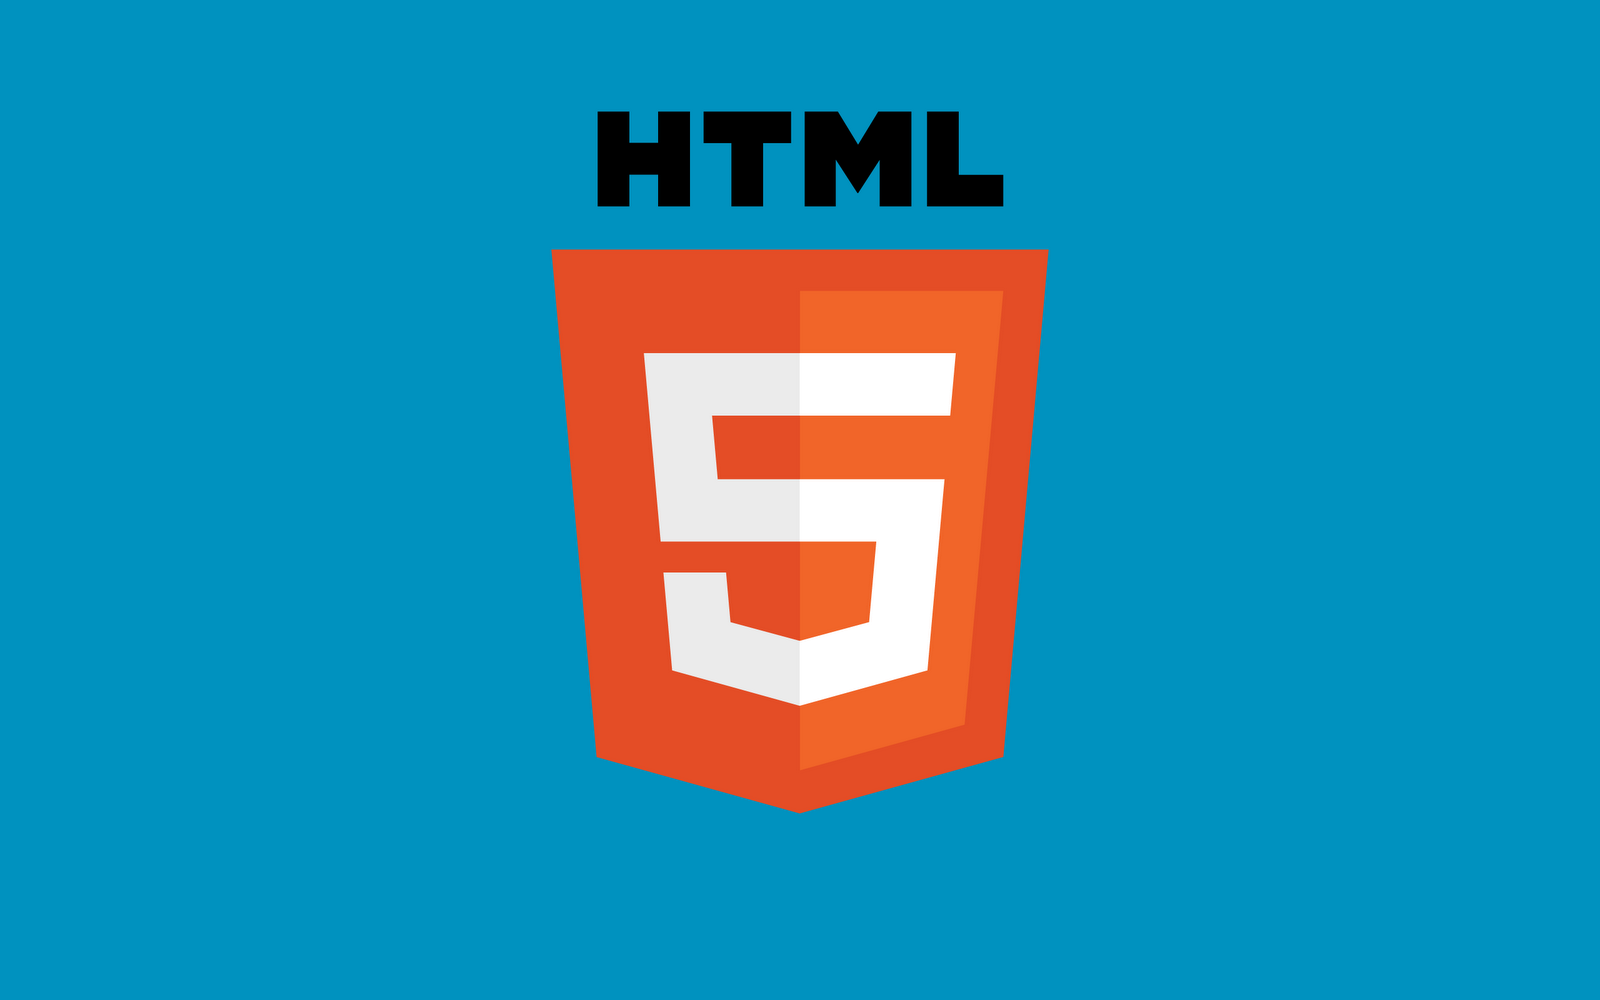 Download Free Logo Design: HTML5 Logo Vector PSD for Free Download